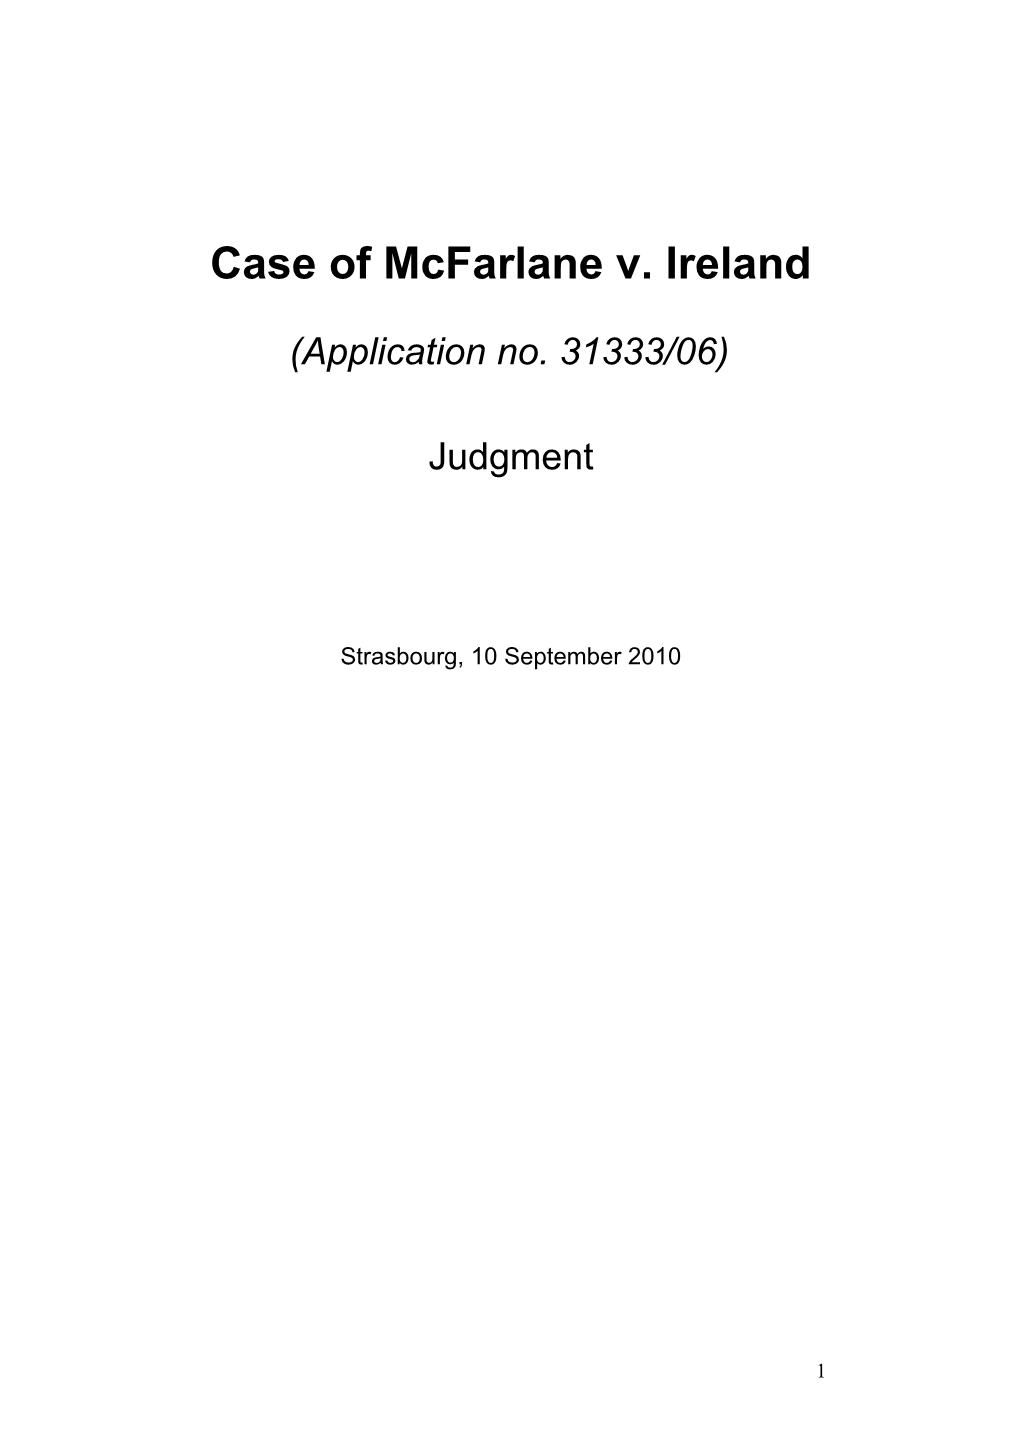 Case of Mcfarlane V. Ireland